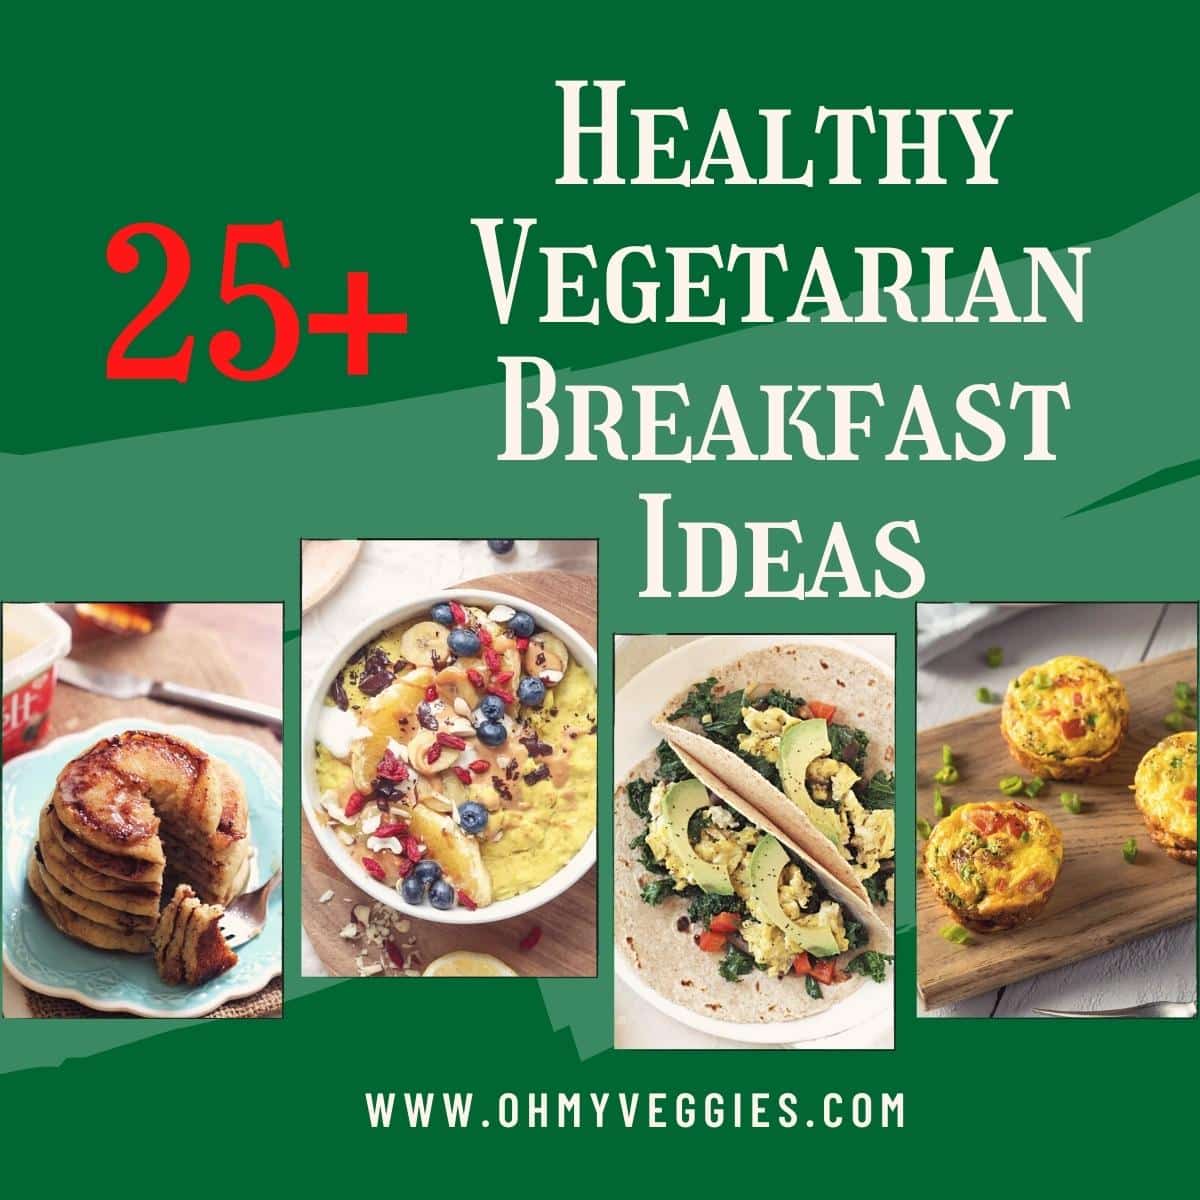 healthier vegetarian breakfast recipes.